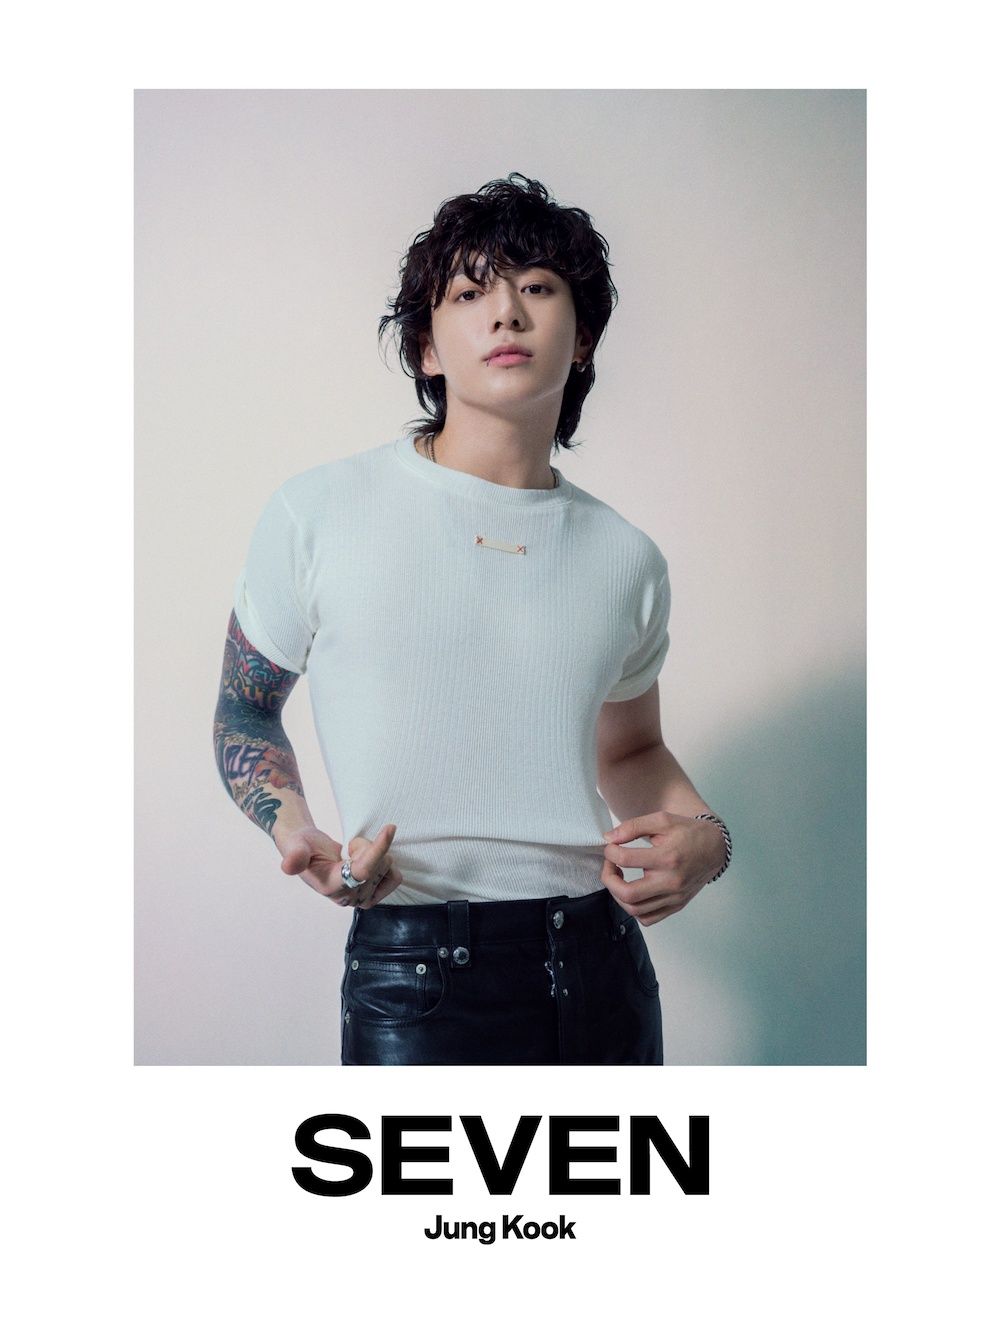 BTS・JUNG KOOK　初ソロシングル『Seven』　ファッションブランド風のコンセプトフォトが公開　